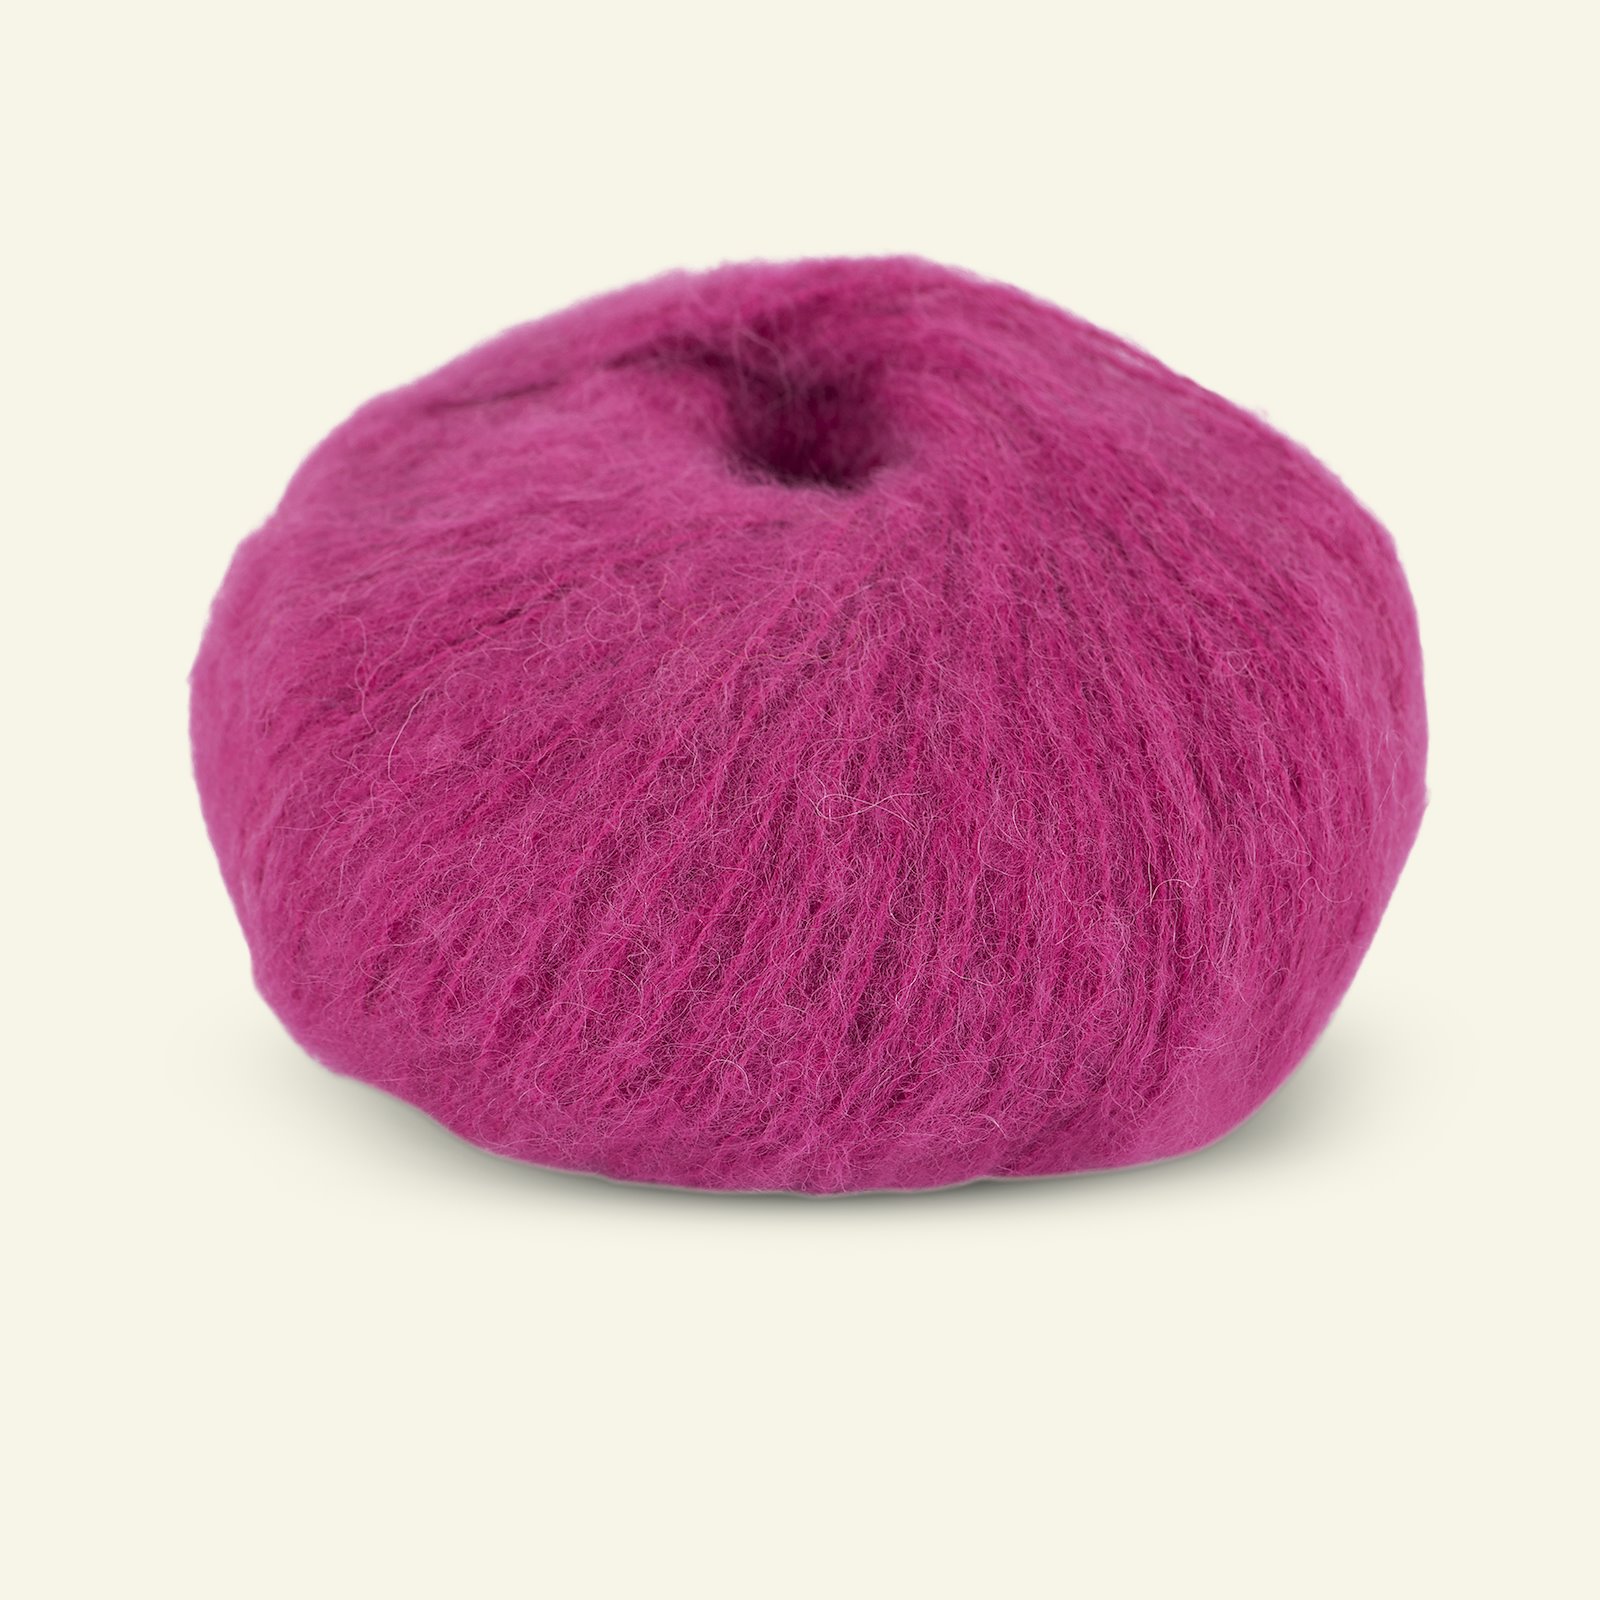 Du Store Alpakka, airy alpaca yarn "Faerytale", pink (813) 90000620_pack